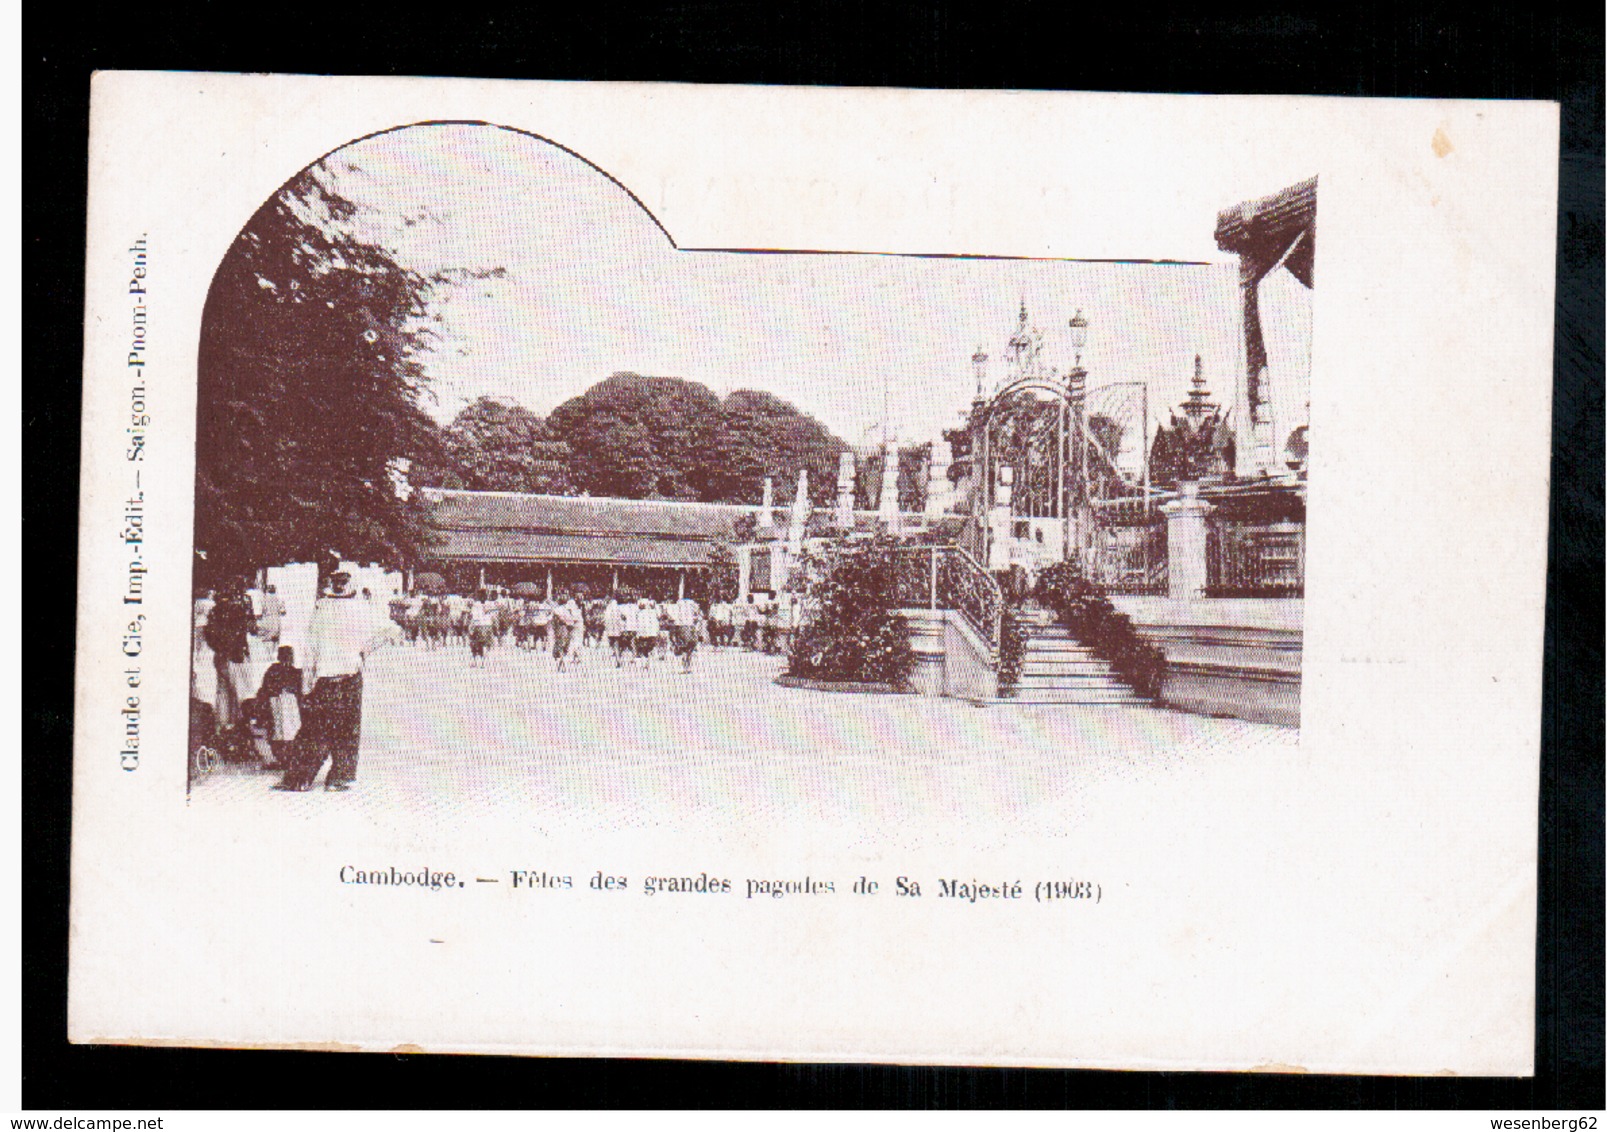 CAMBODIA  Cambodge Fetes Des Grandes Pagodes De Sa Majeste Ca 1910 OLD POSTCARD 2 Scans - Cambodia